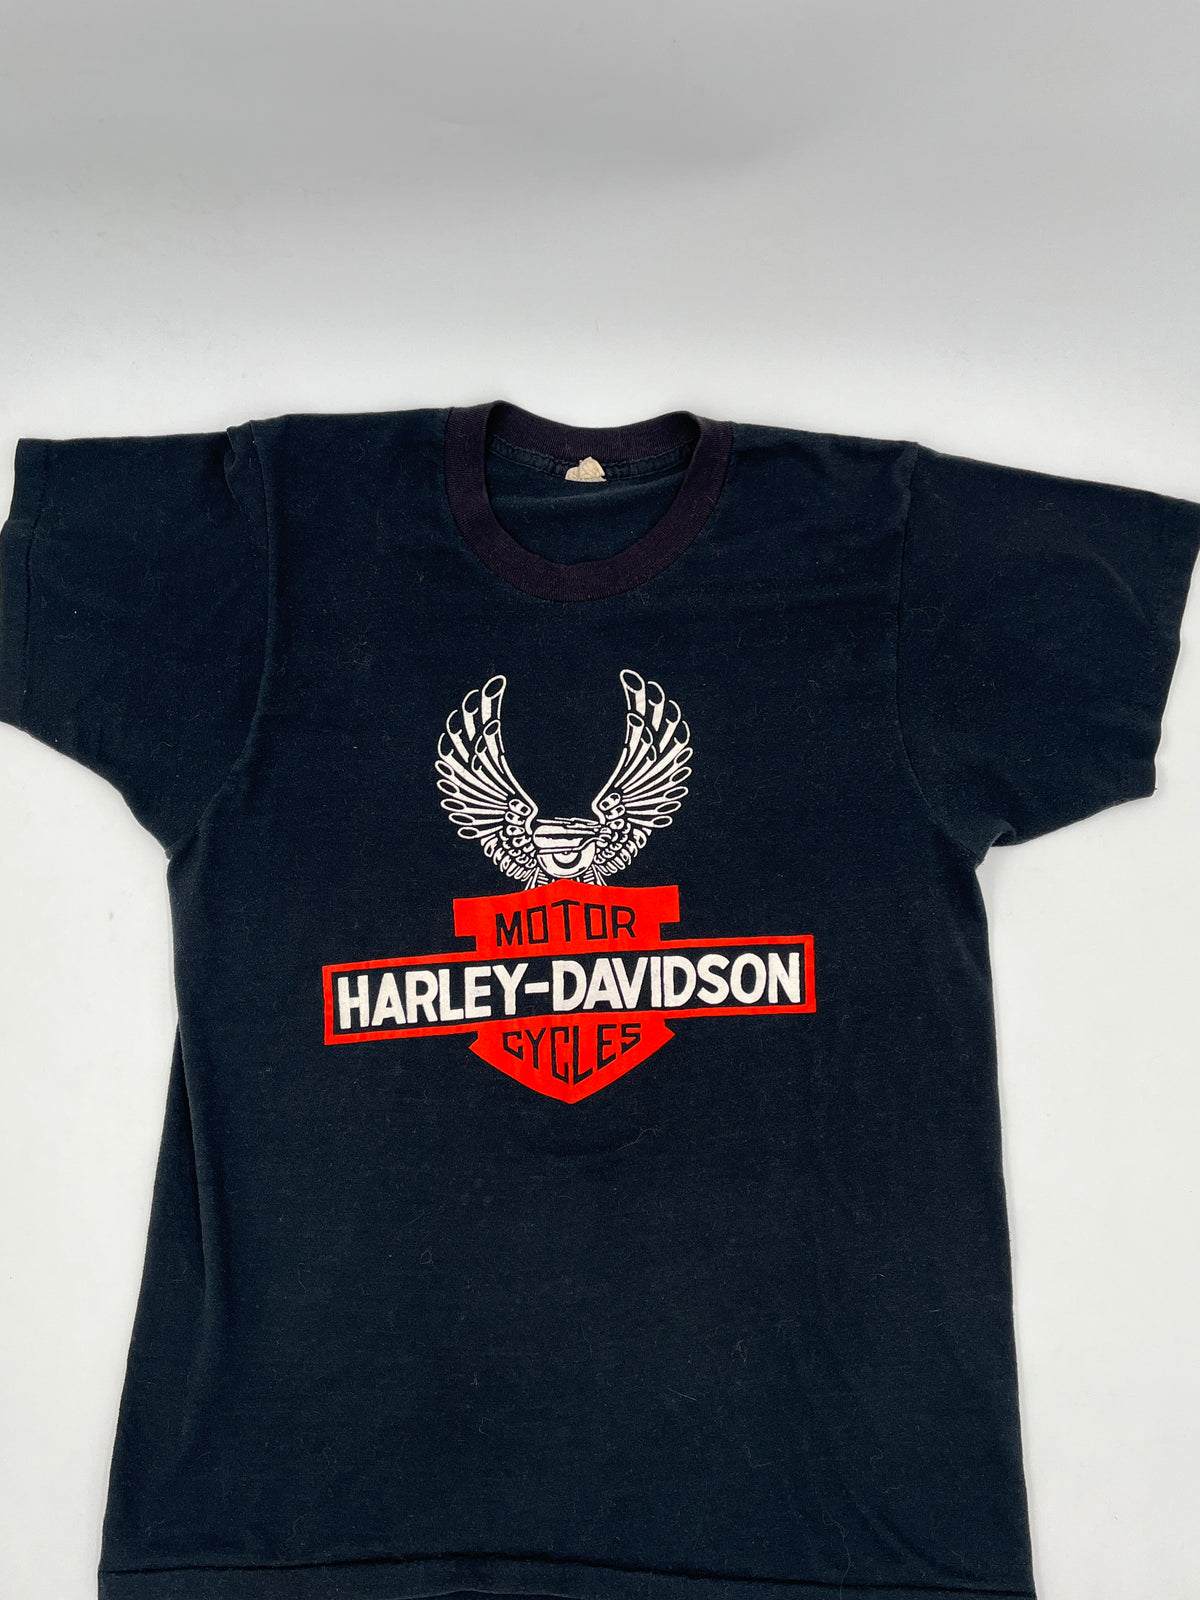 Vintage Harley Davidson Shirt